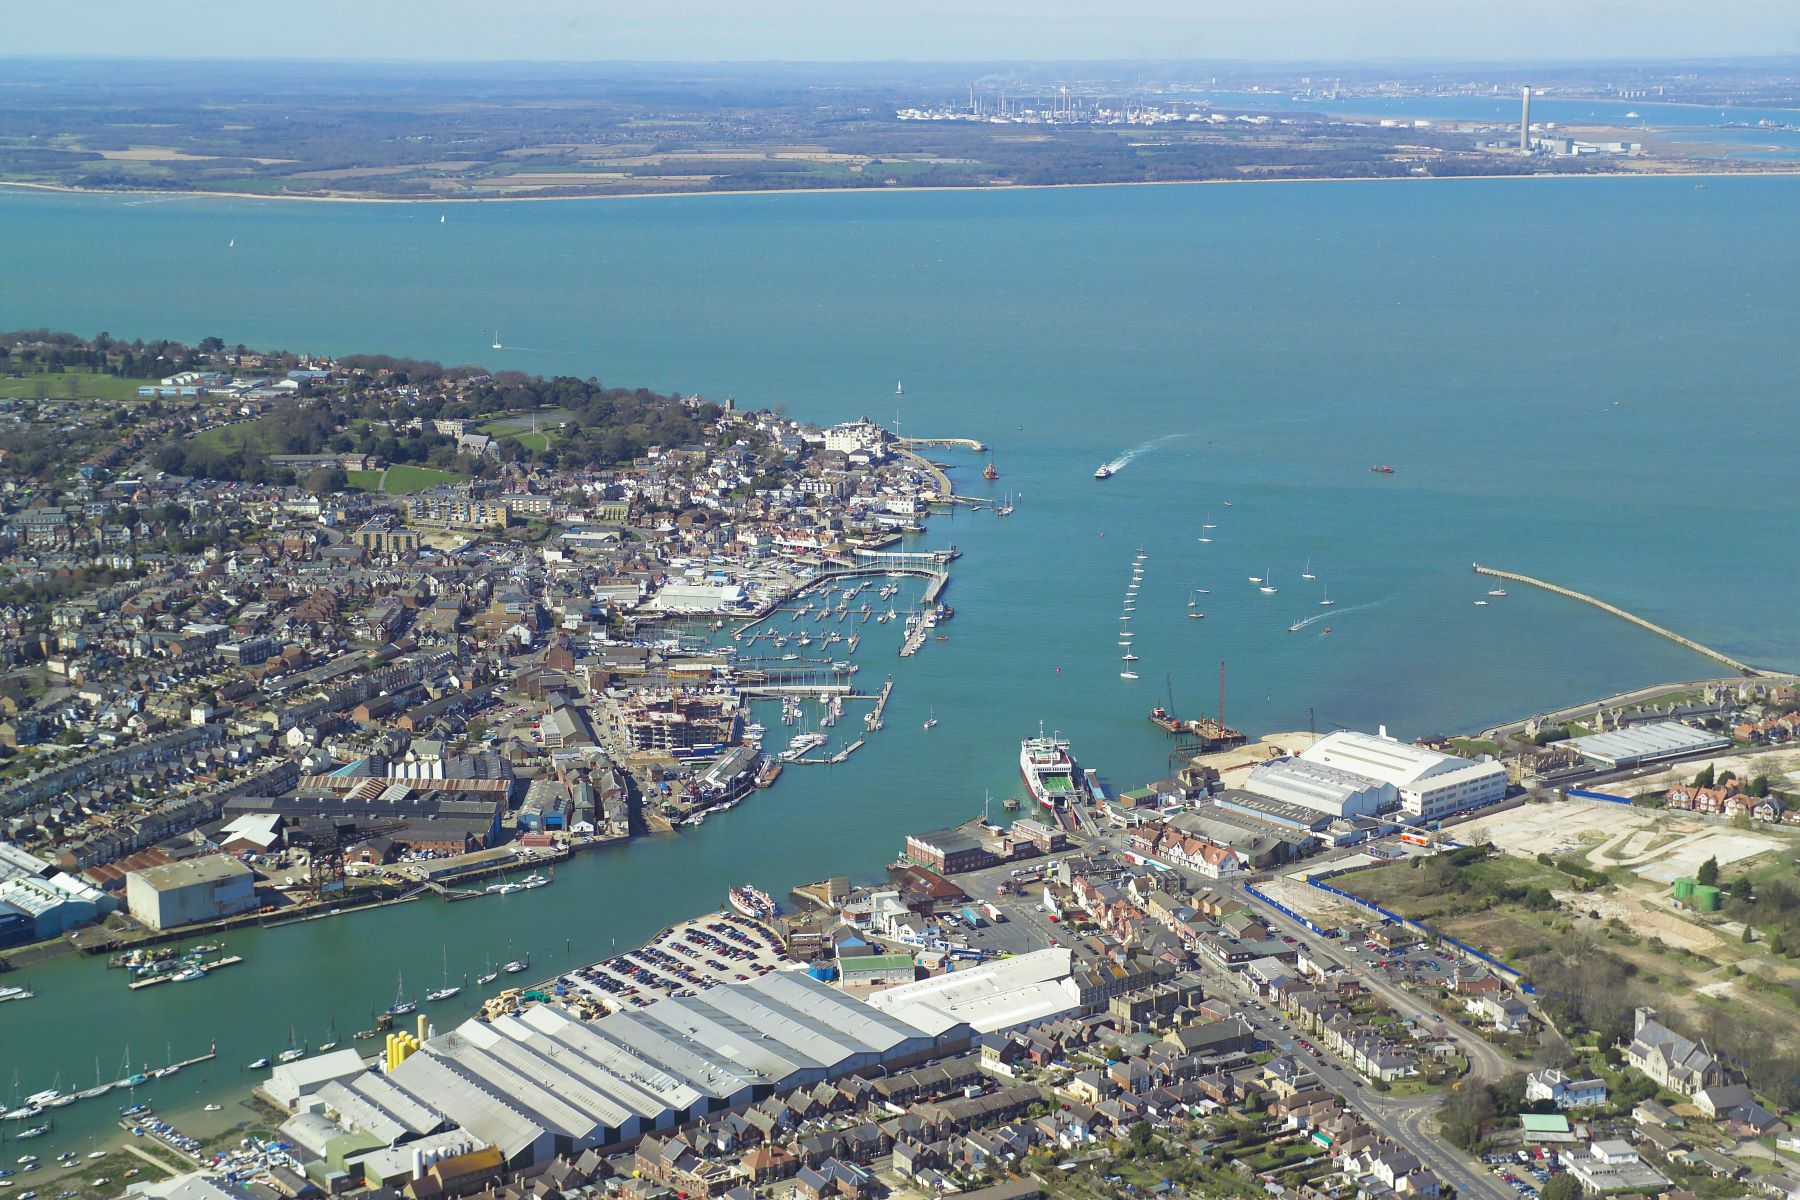 Maritime UK Solent seeks new board members for its ambitious new era